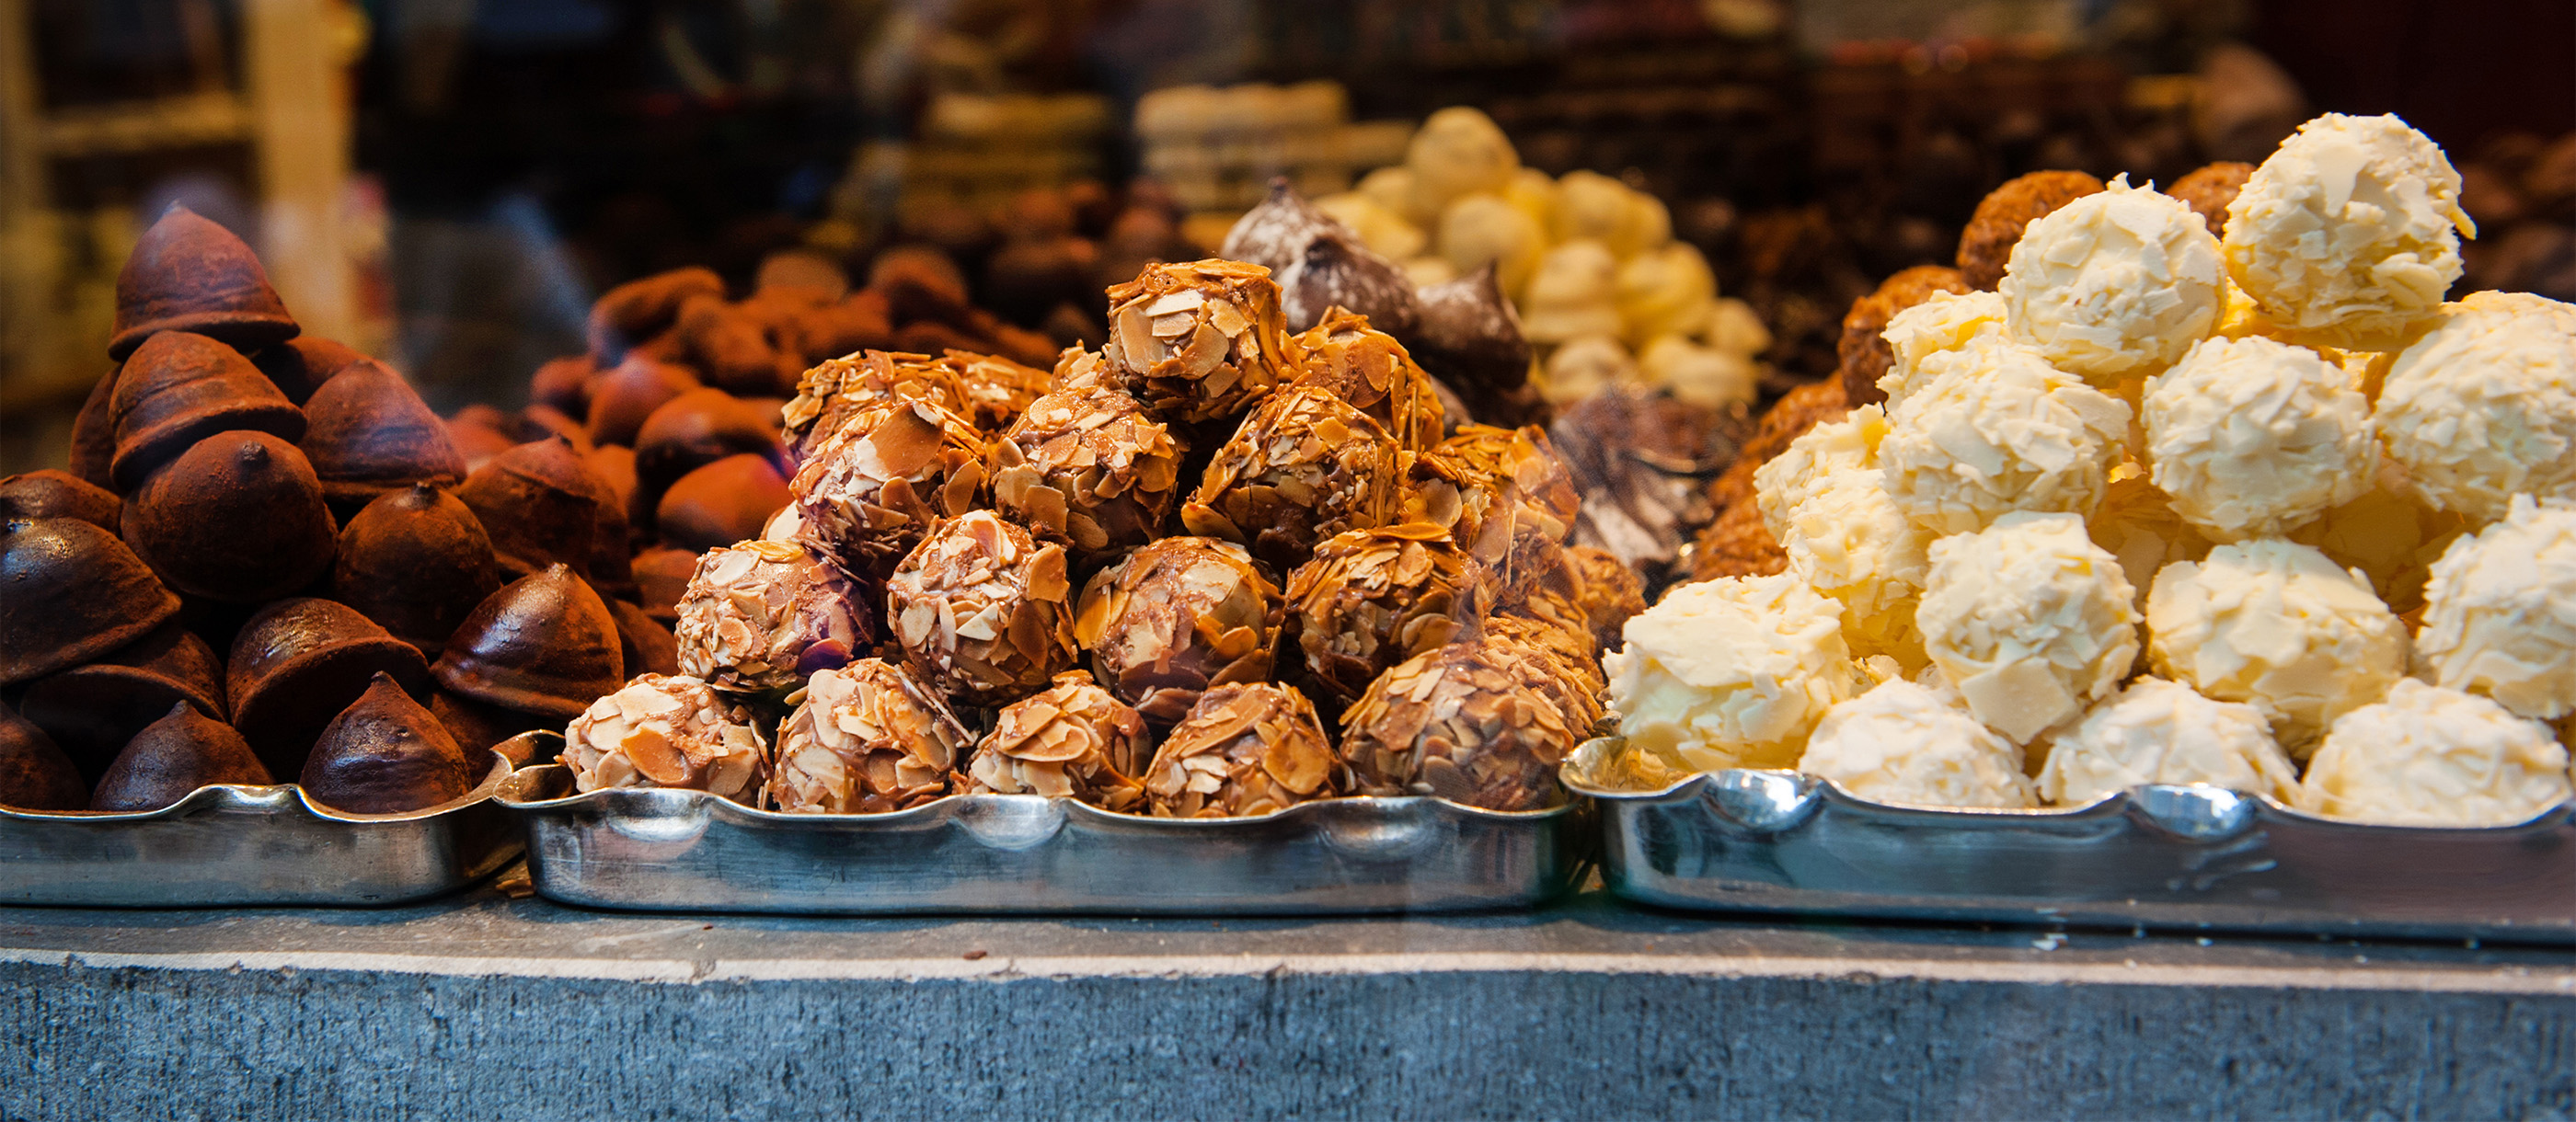 10 Most Popular Belgian Desserts - TasteAtlas